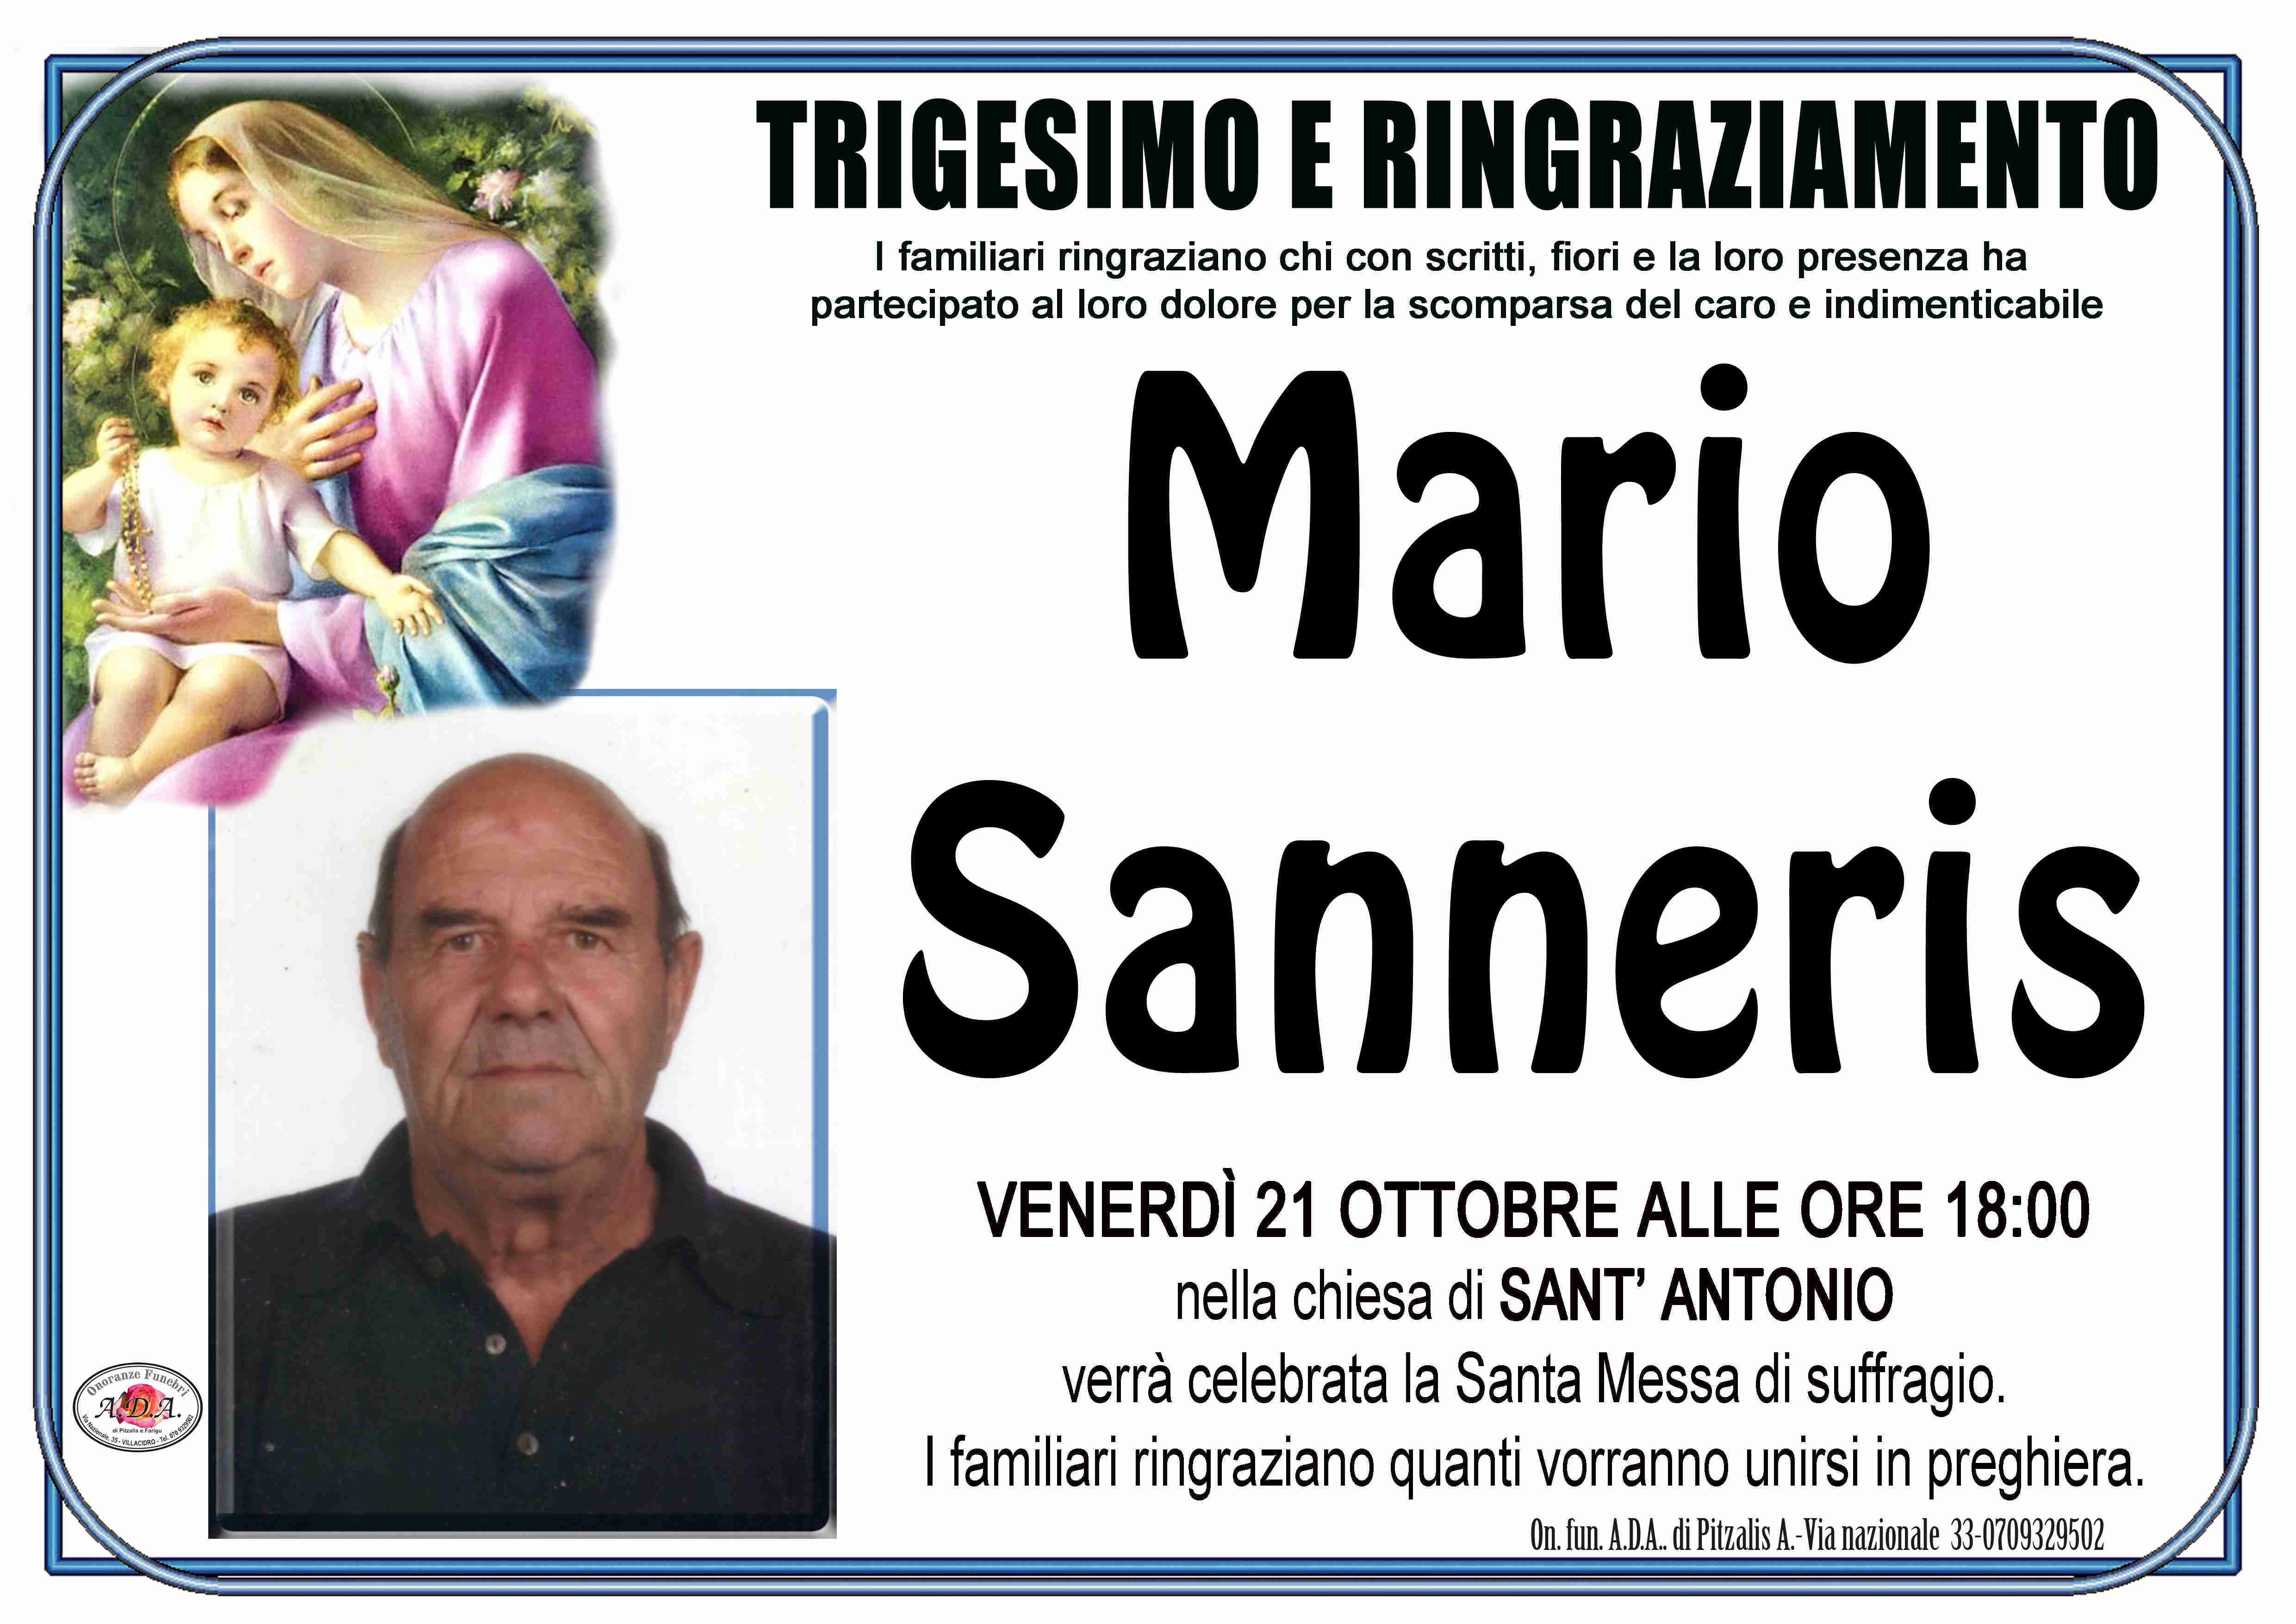 Mario Sanneris